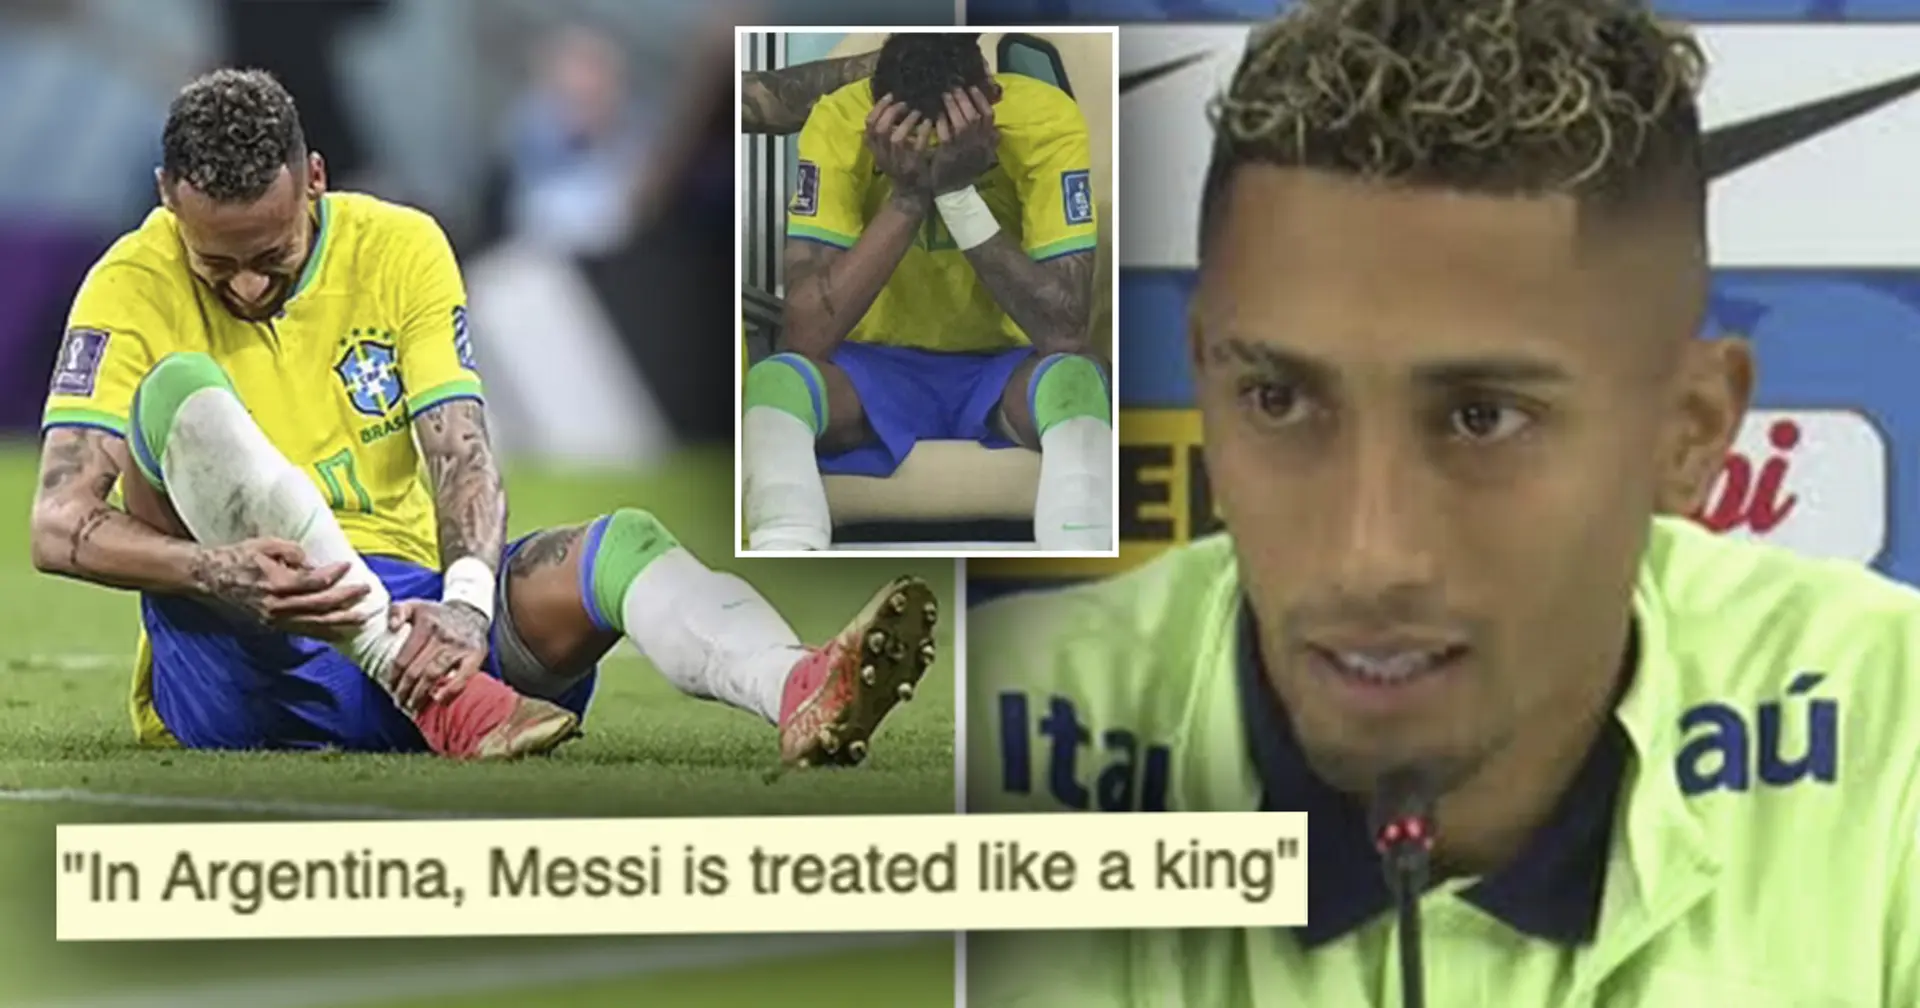 'They want him to break his leg': Raphinha slams Brazil fans amid Neymar treatment